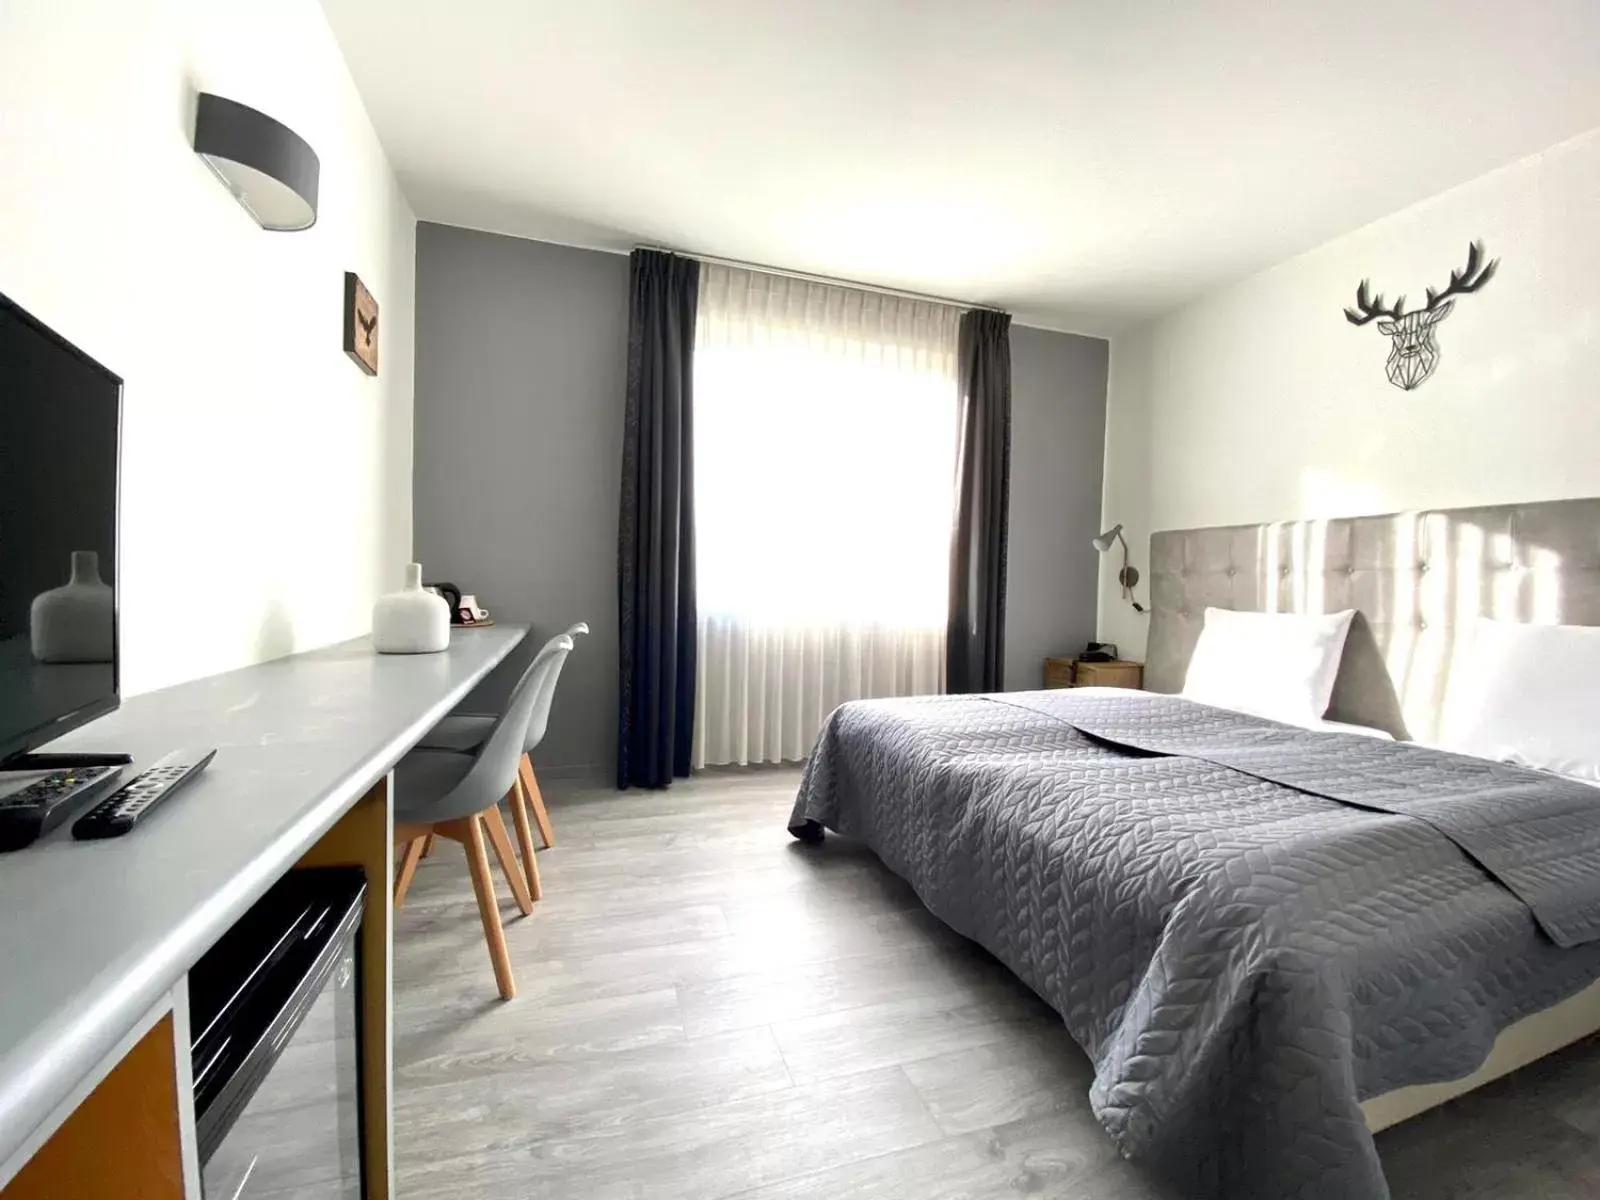 Bedroom in Hotel De Fierlant